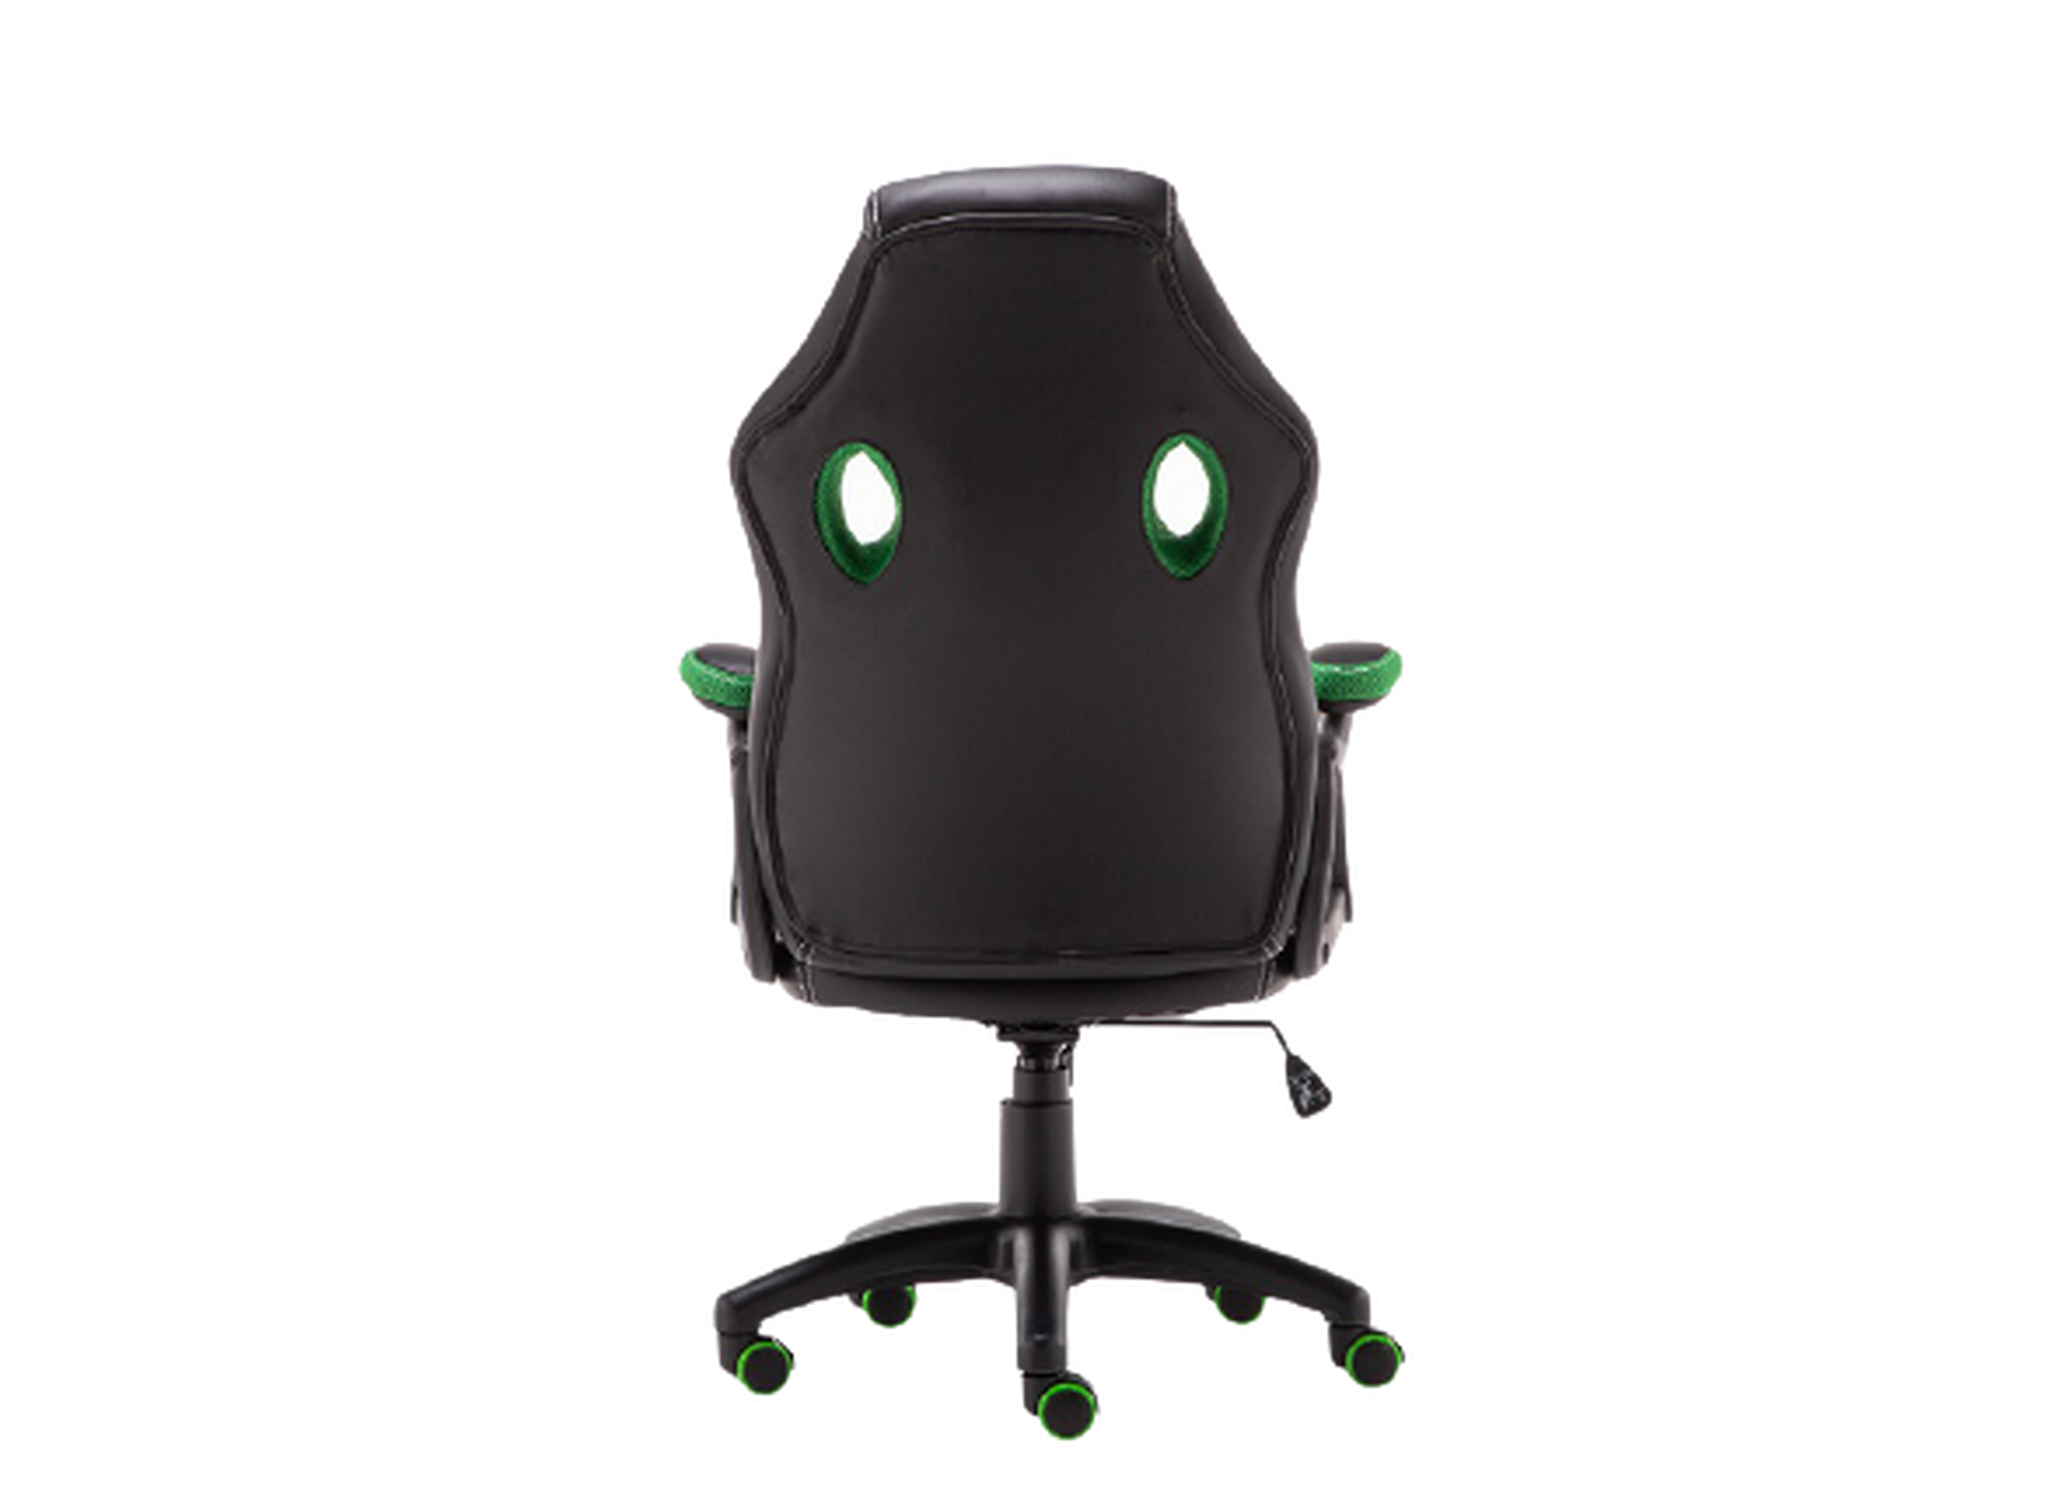 Datazone GC-12 Gaming Chair - Green